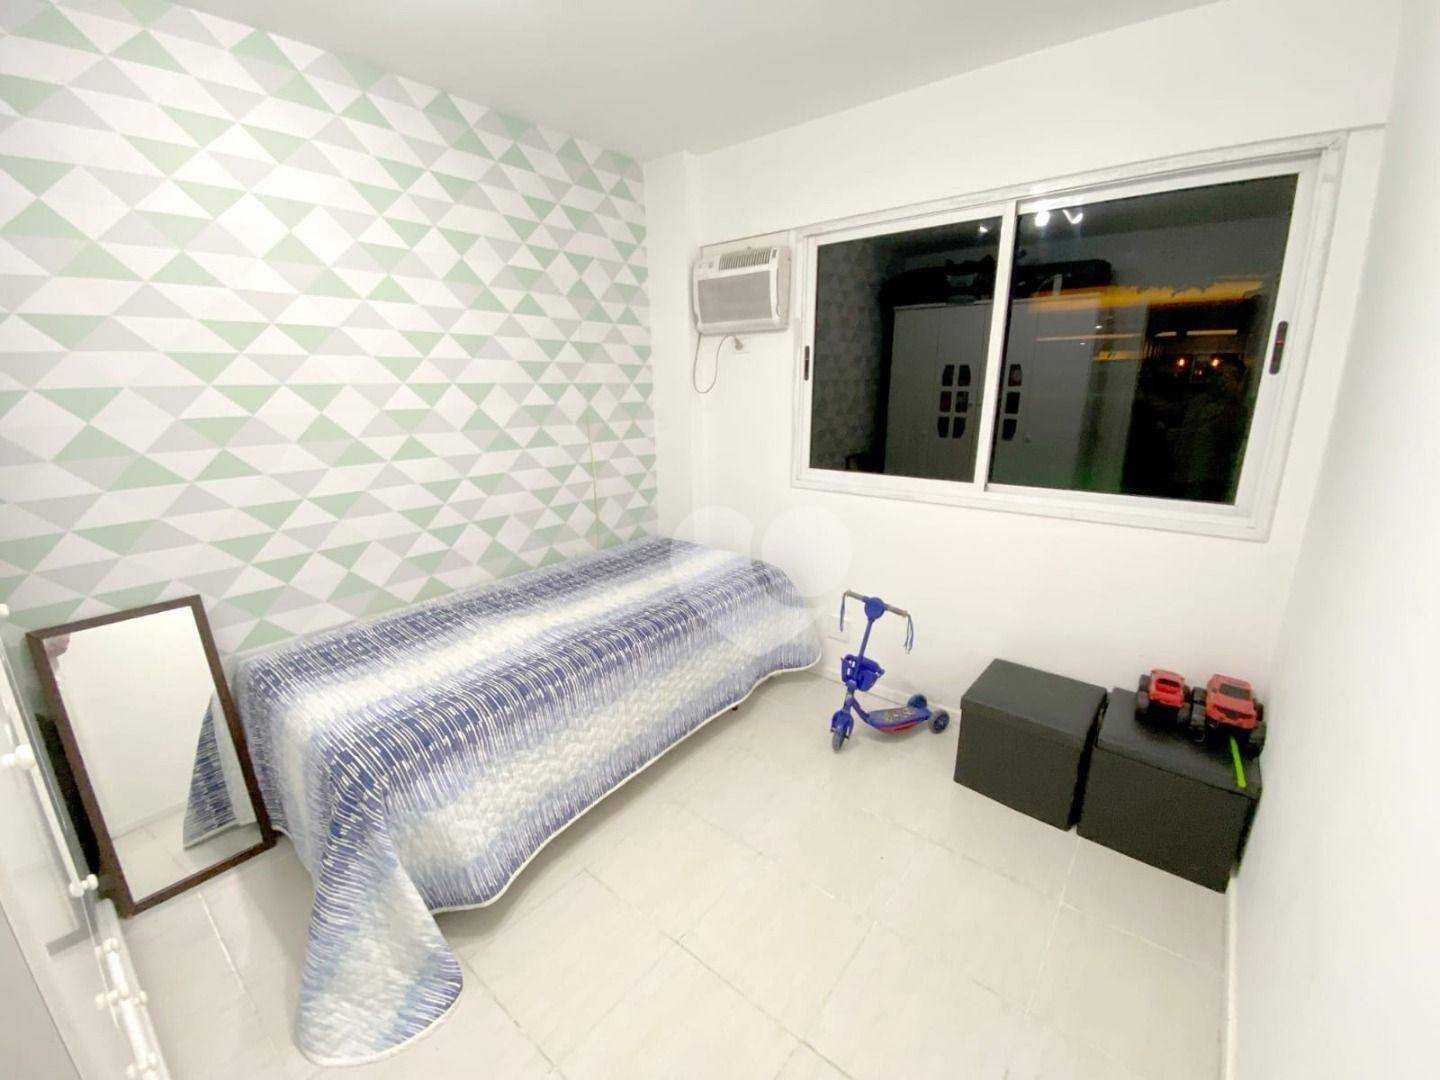 Condominium in Kapim Melado, Rio de Janeiro 11665017